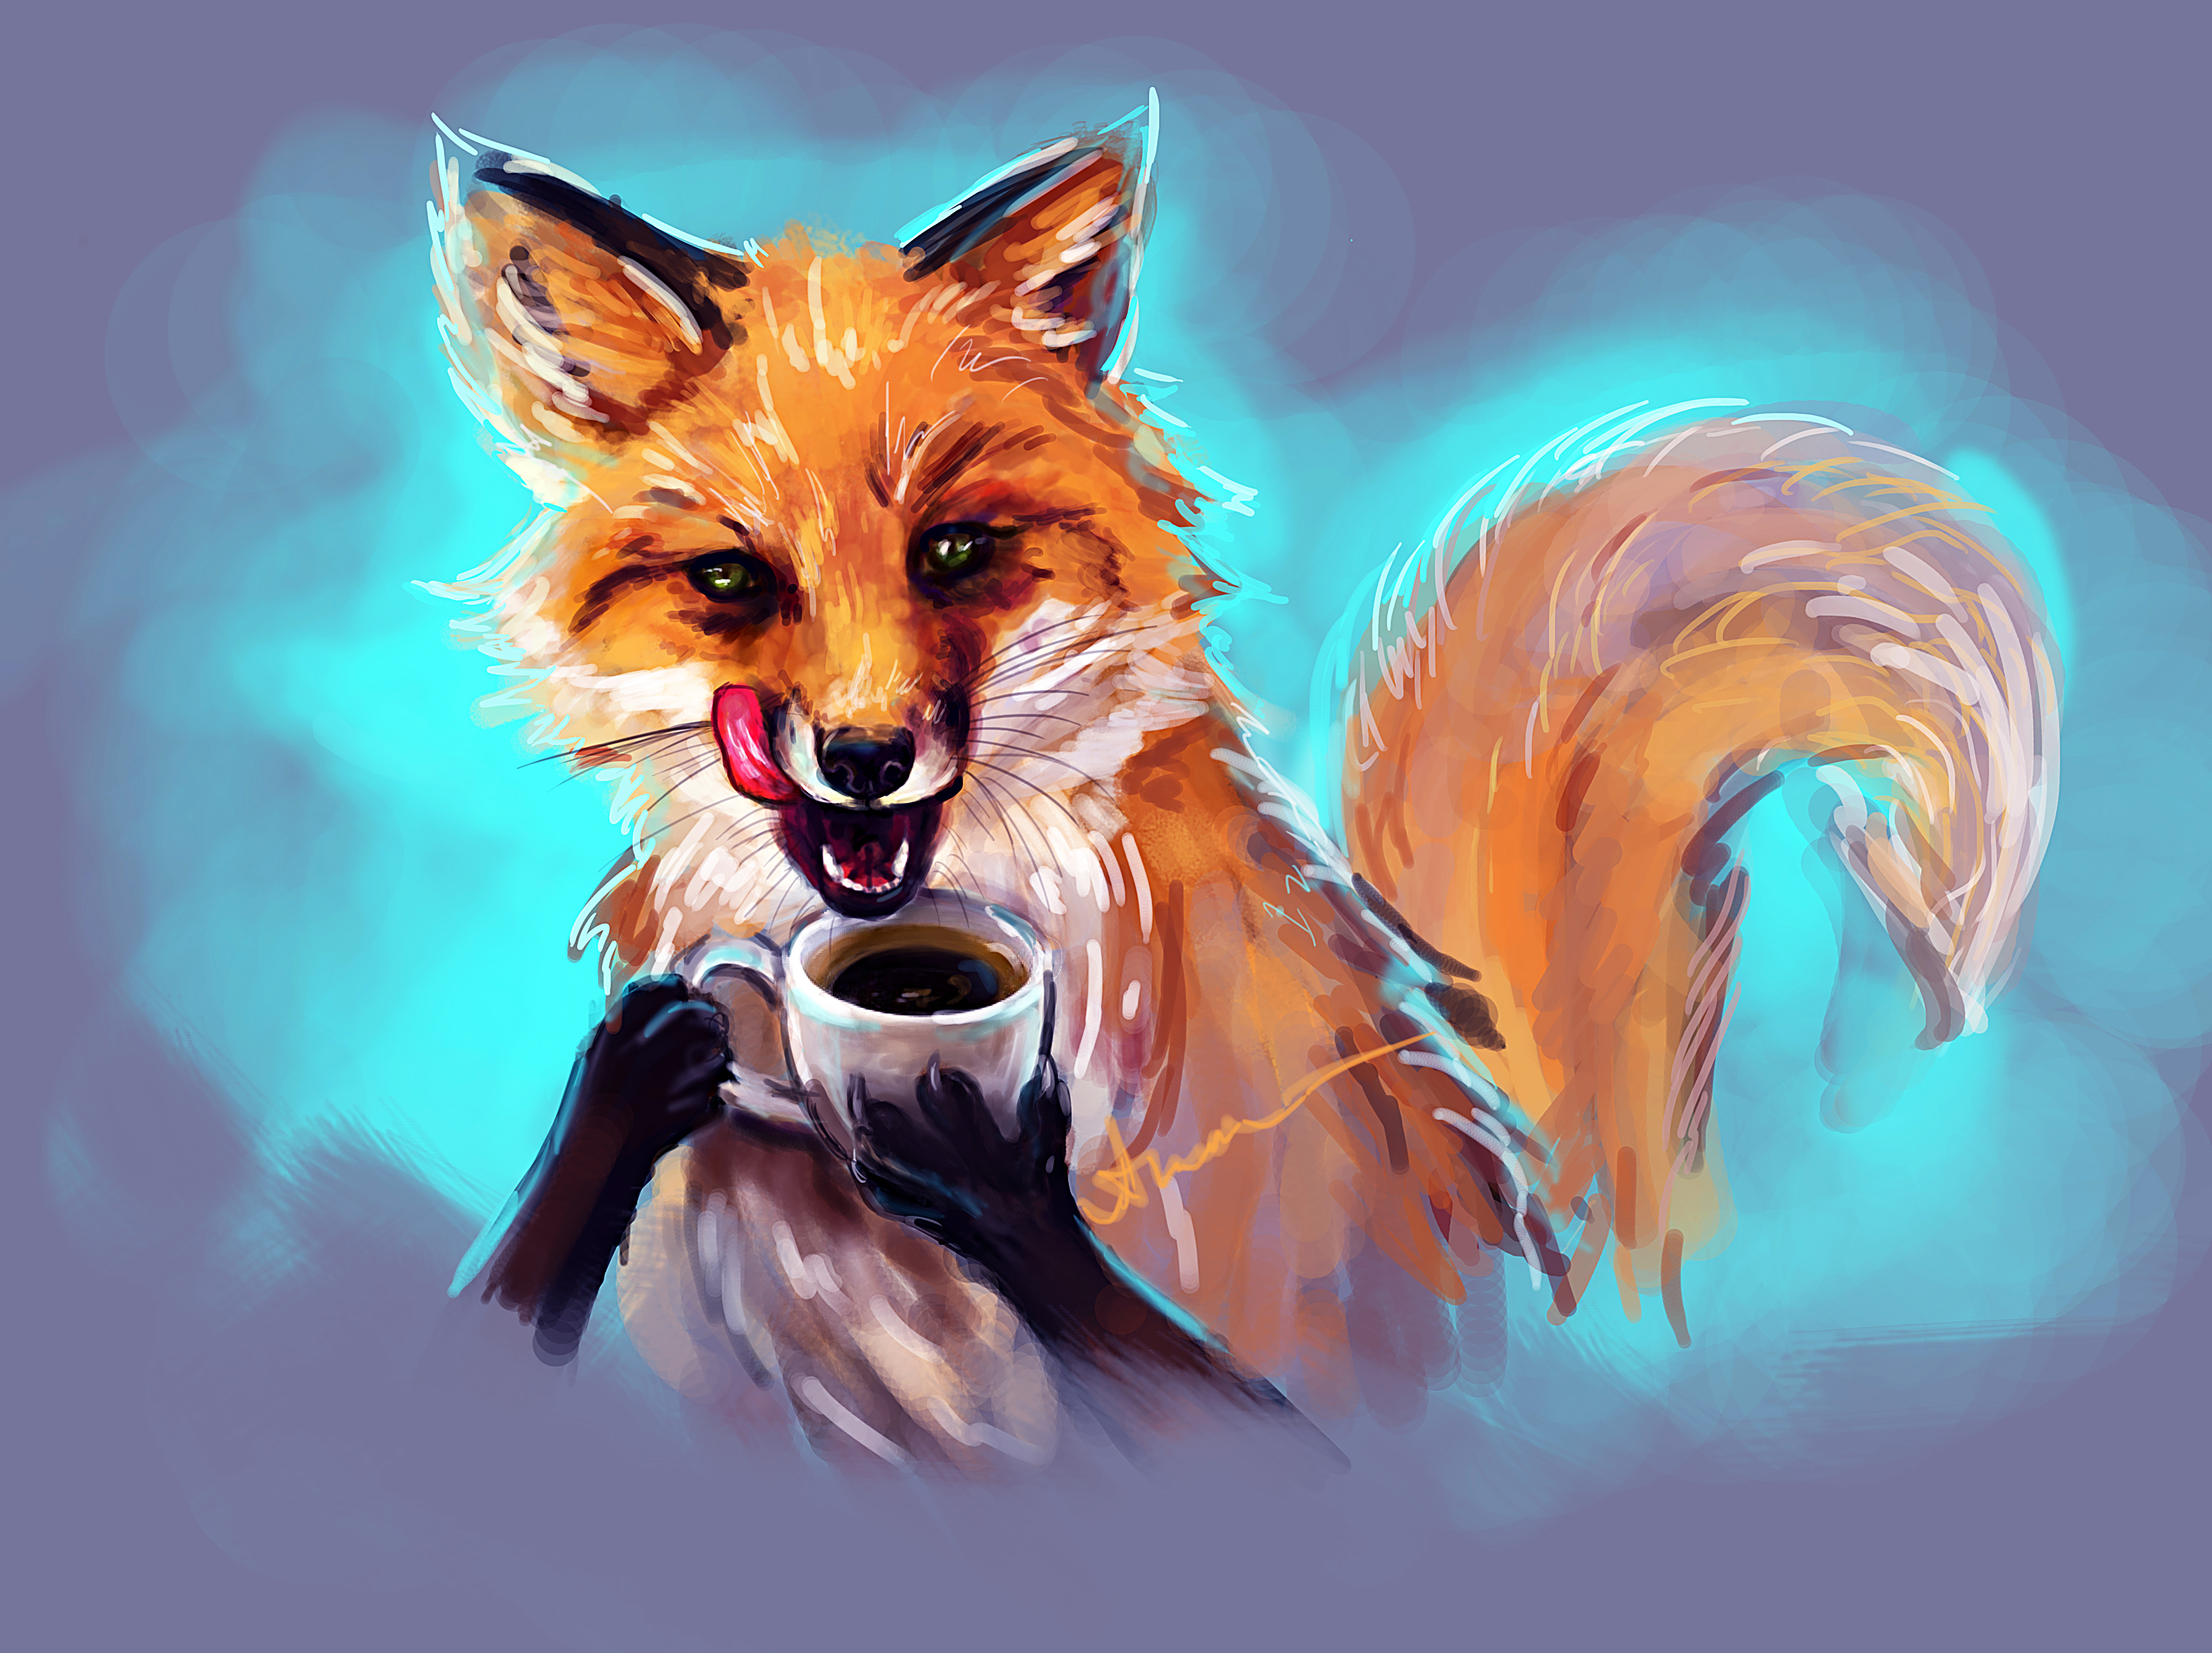 Fox drinking coffee by FoxyAnt